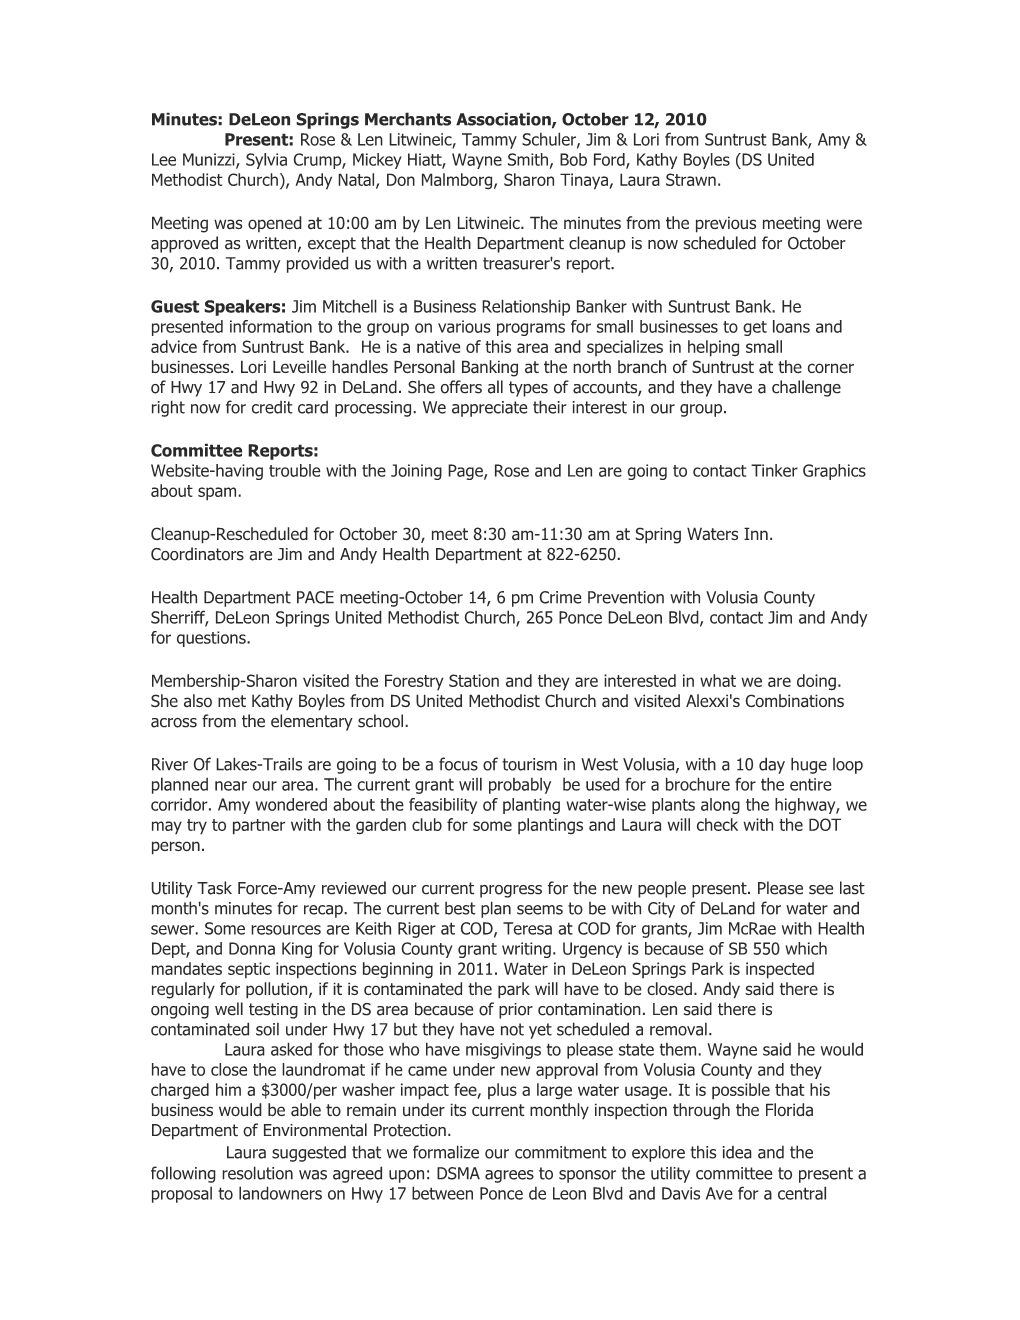 Deleon Springs Merchants Association Minutes, September 14, 2010